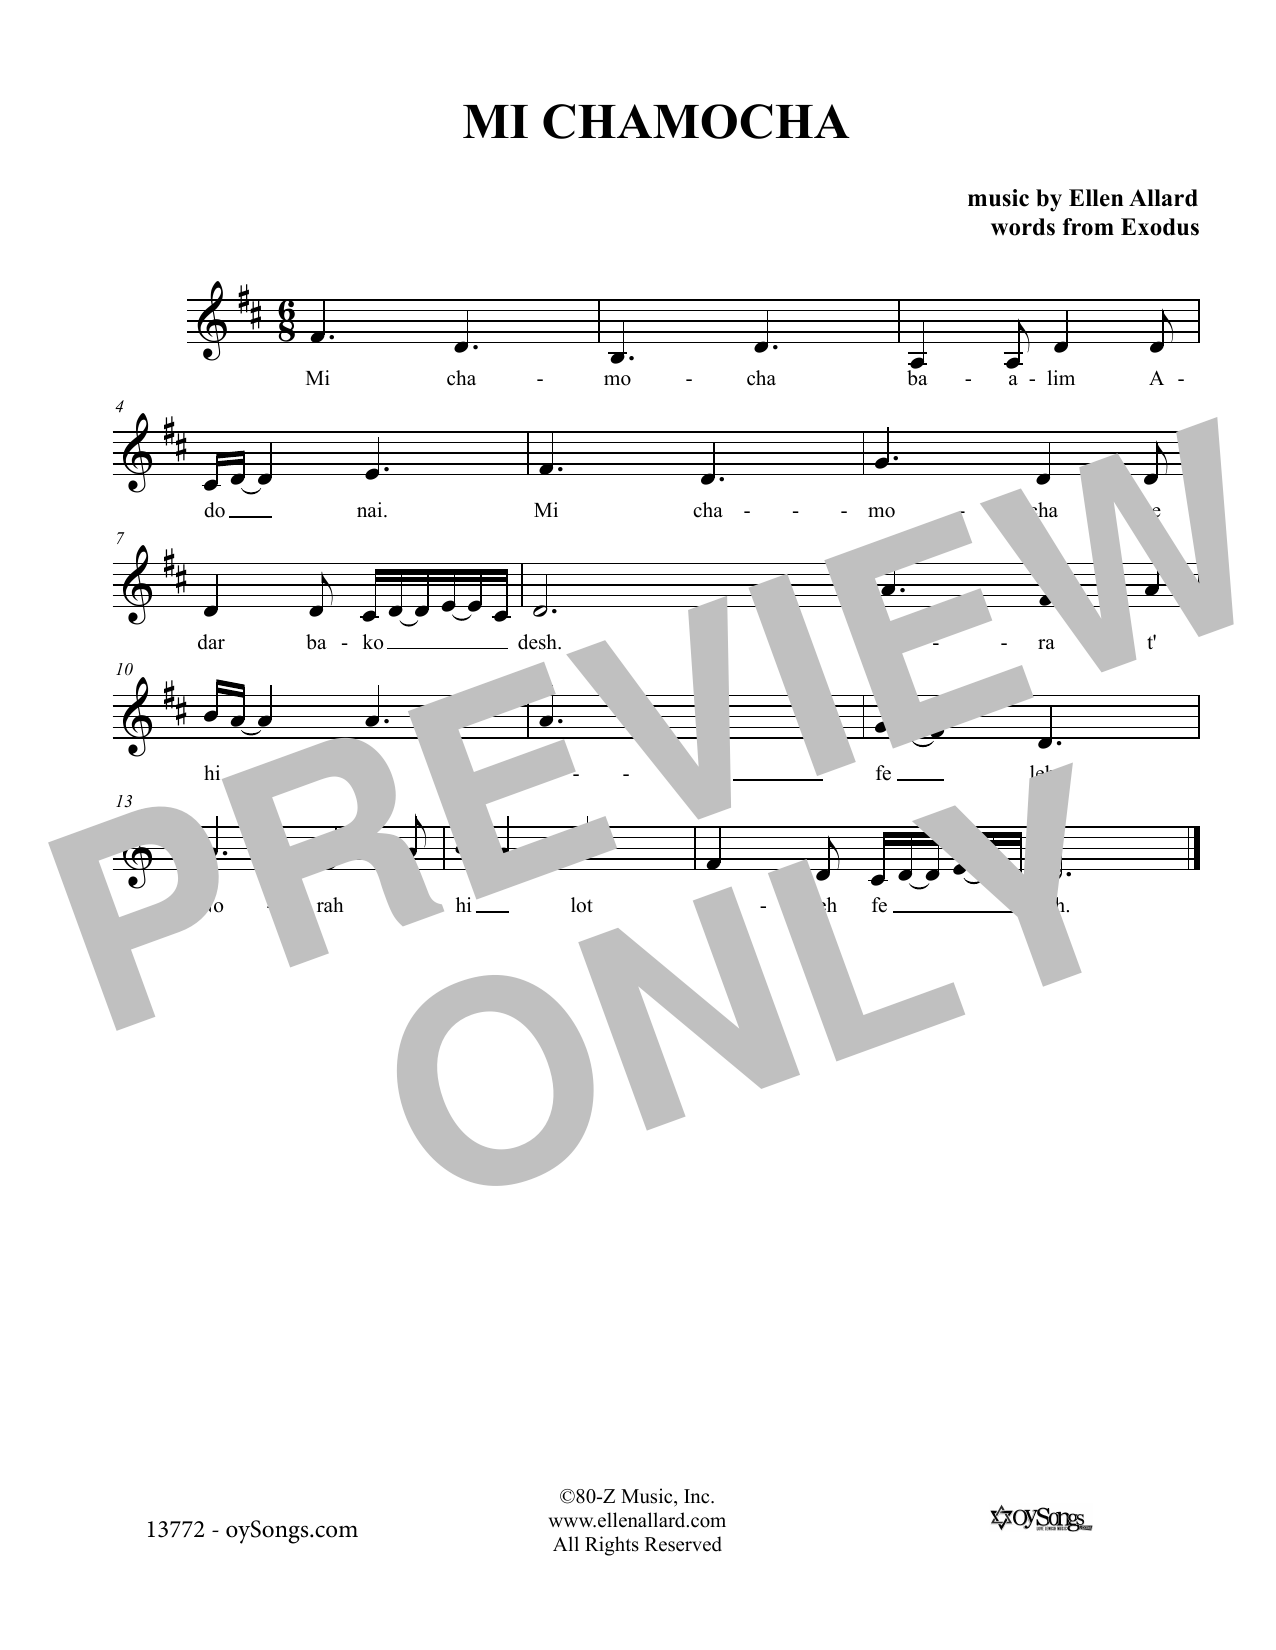 Download Ellen Allard Mi Chamocha Sheet Music and learn how to play Melody Line, Lyrics & Chords PDF digital score in minutes